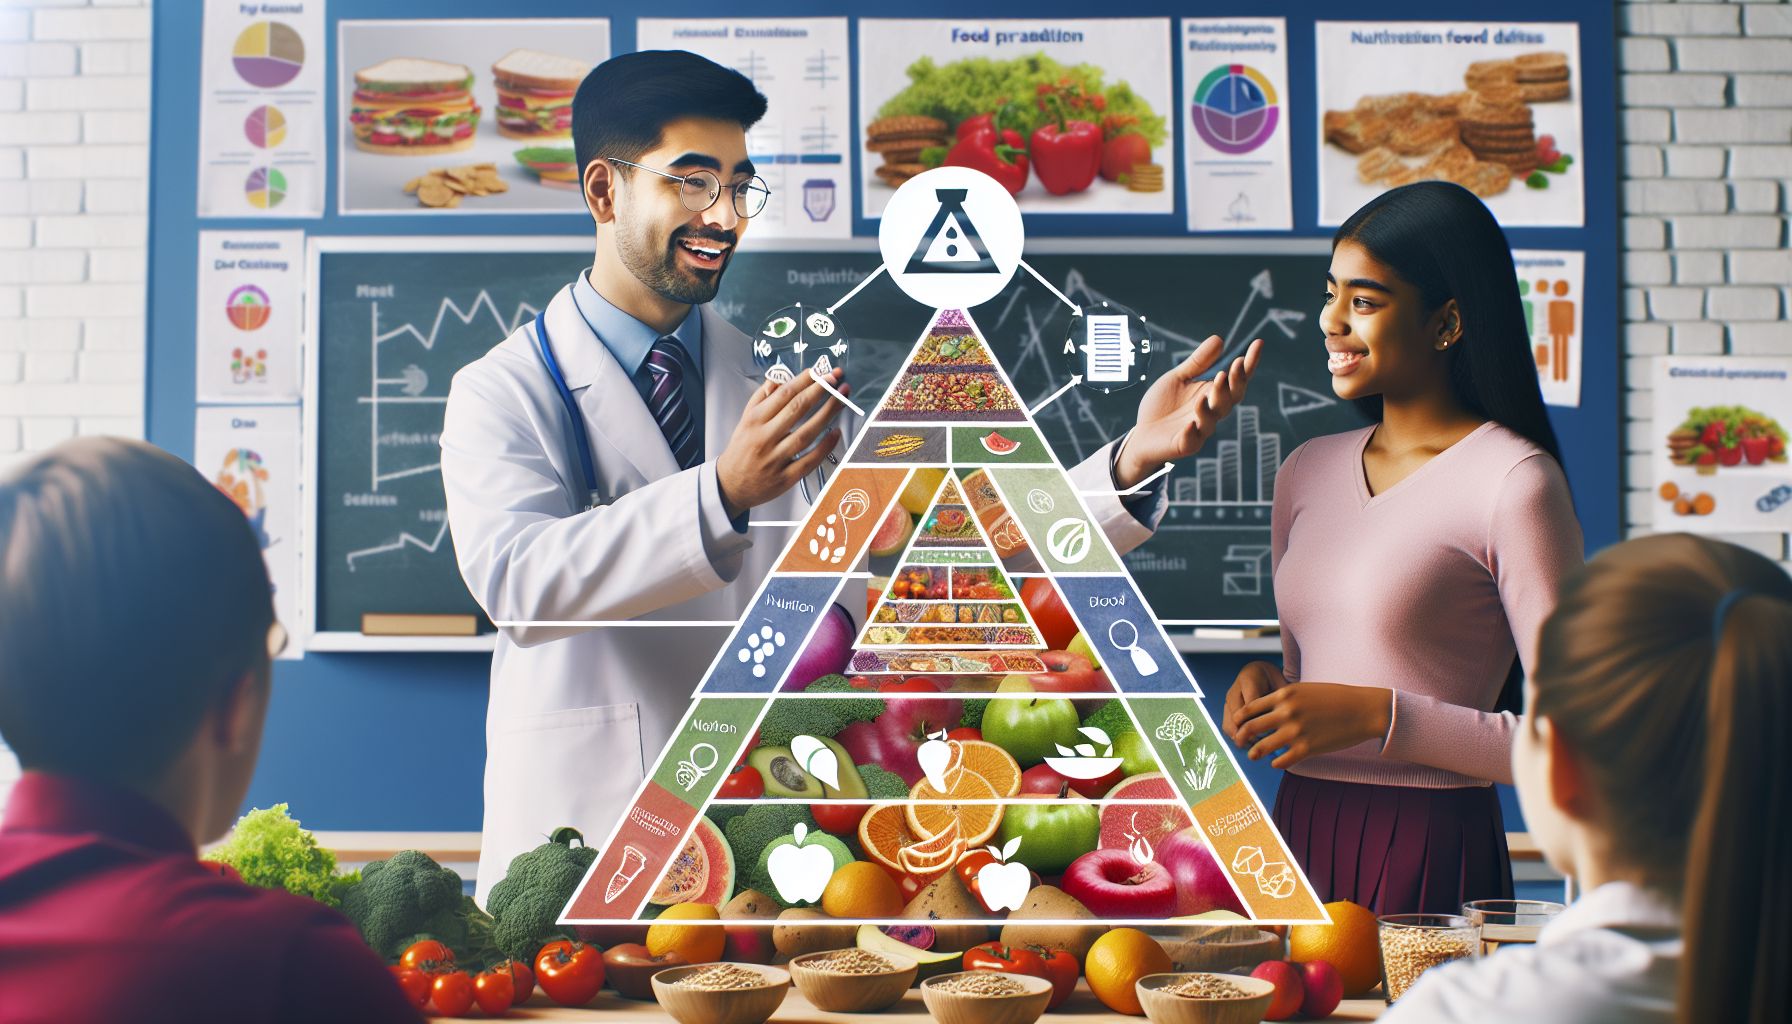 Food Education: A Fundamental Axis for Nurturing Healthy Societies